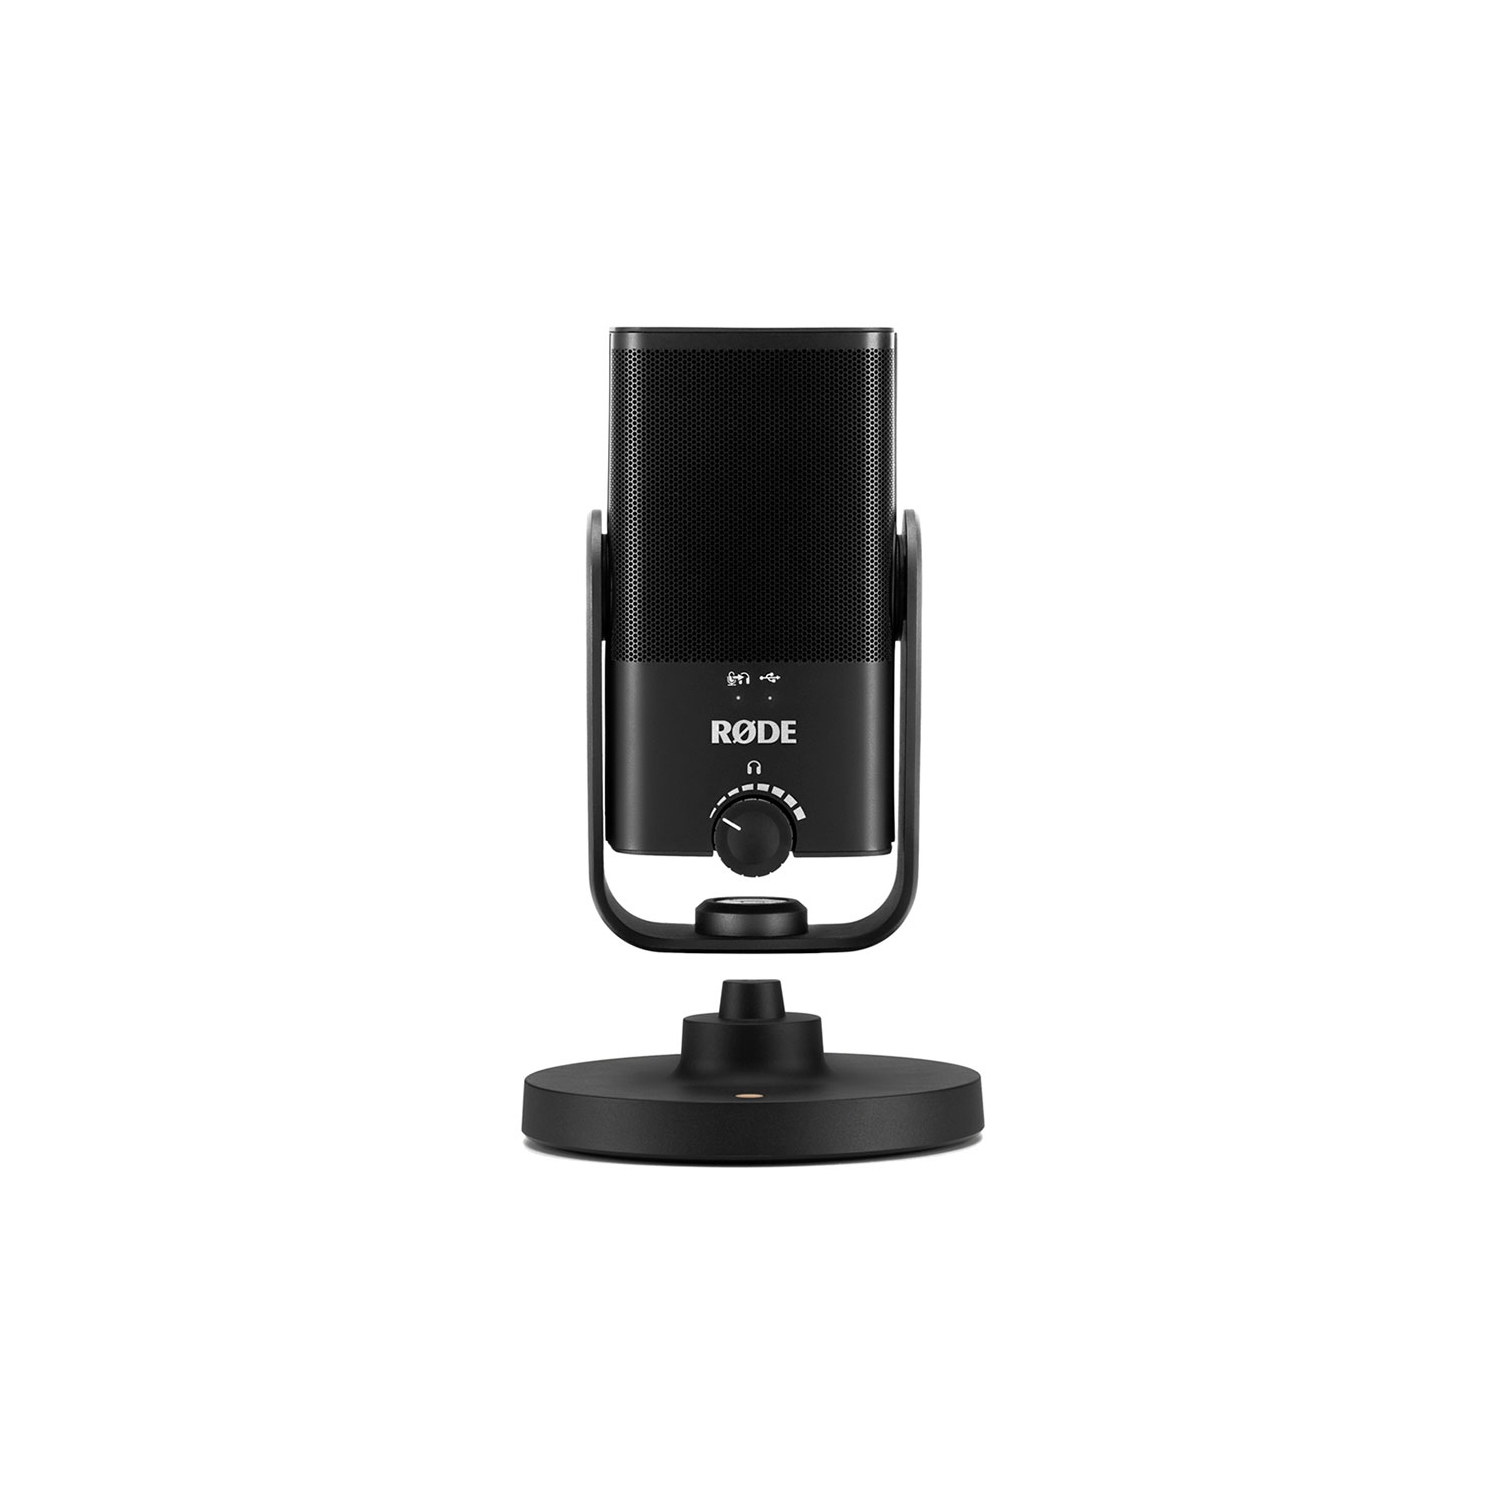 RODE NT-USB MINI Studio Condenser USB Microphone